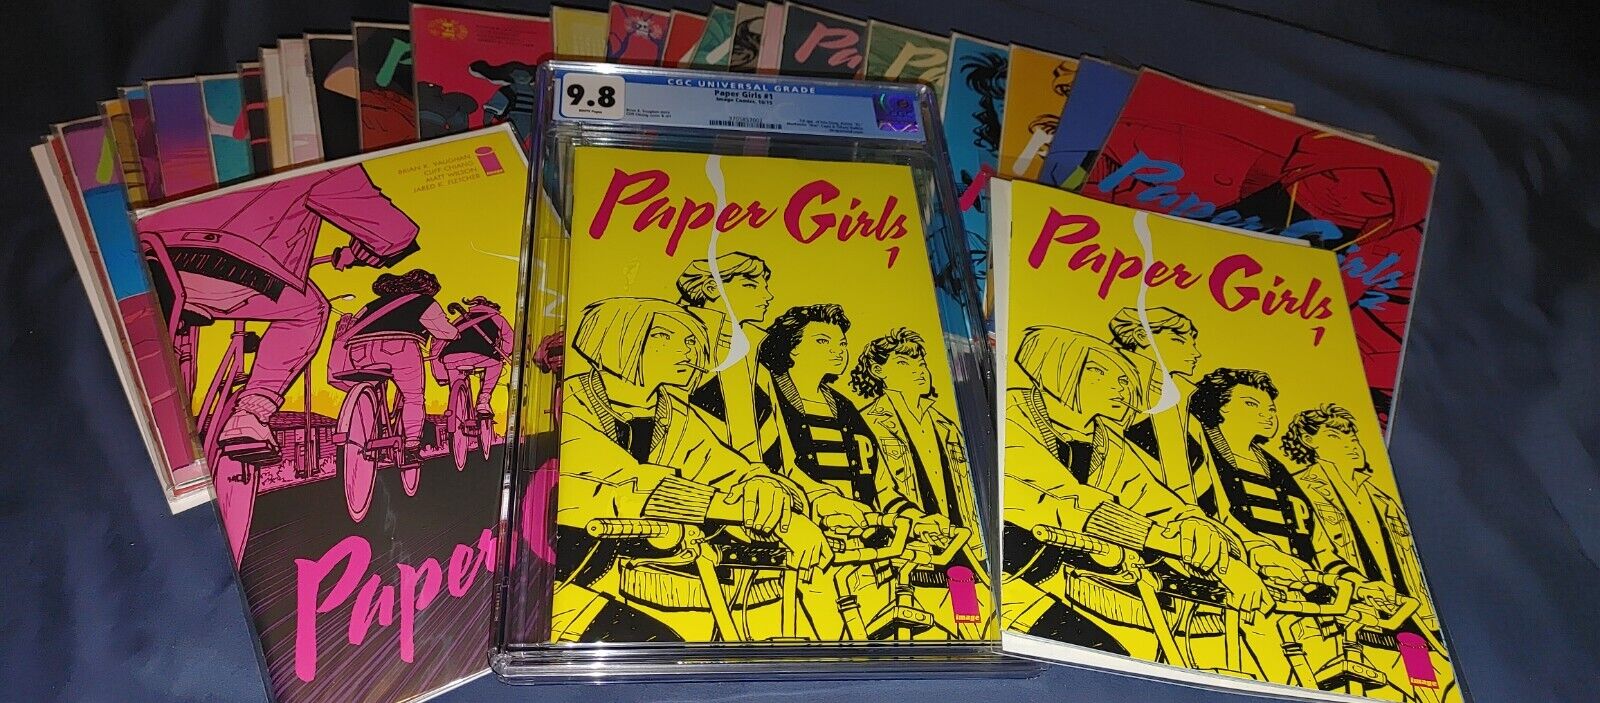 Paper Girls #1 - CGC  PLUS #1-30 COMPLETE SET! AMAZON TV SHOW! | eBay